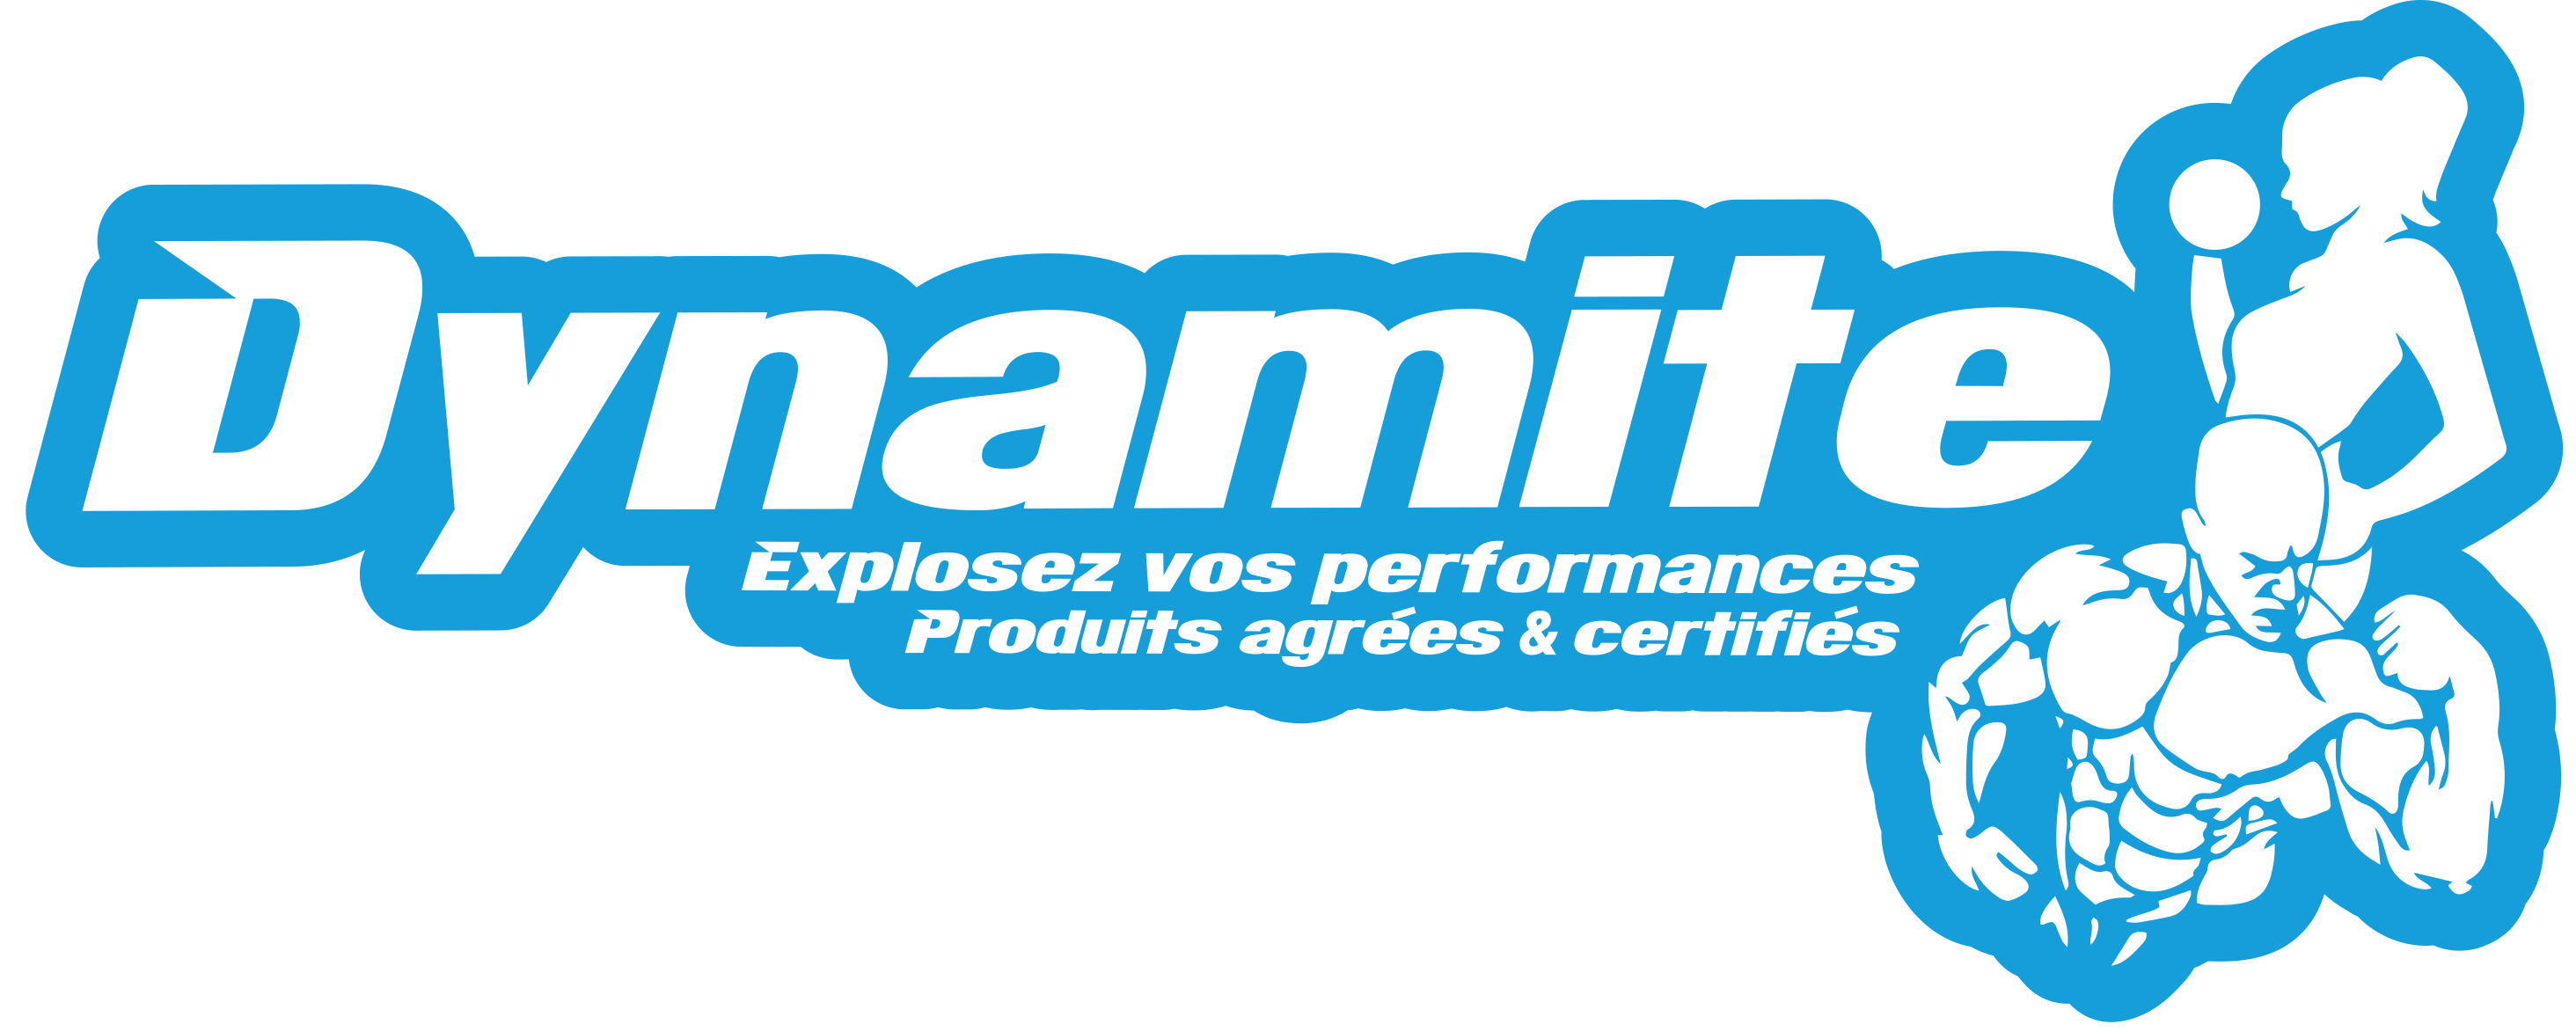 logo Dynamite 2021